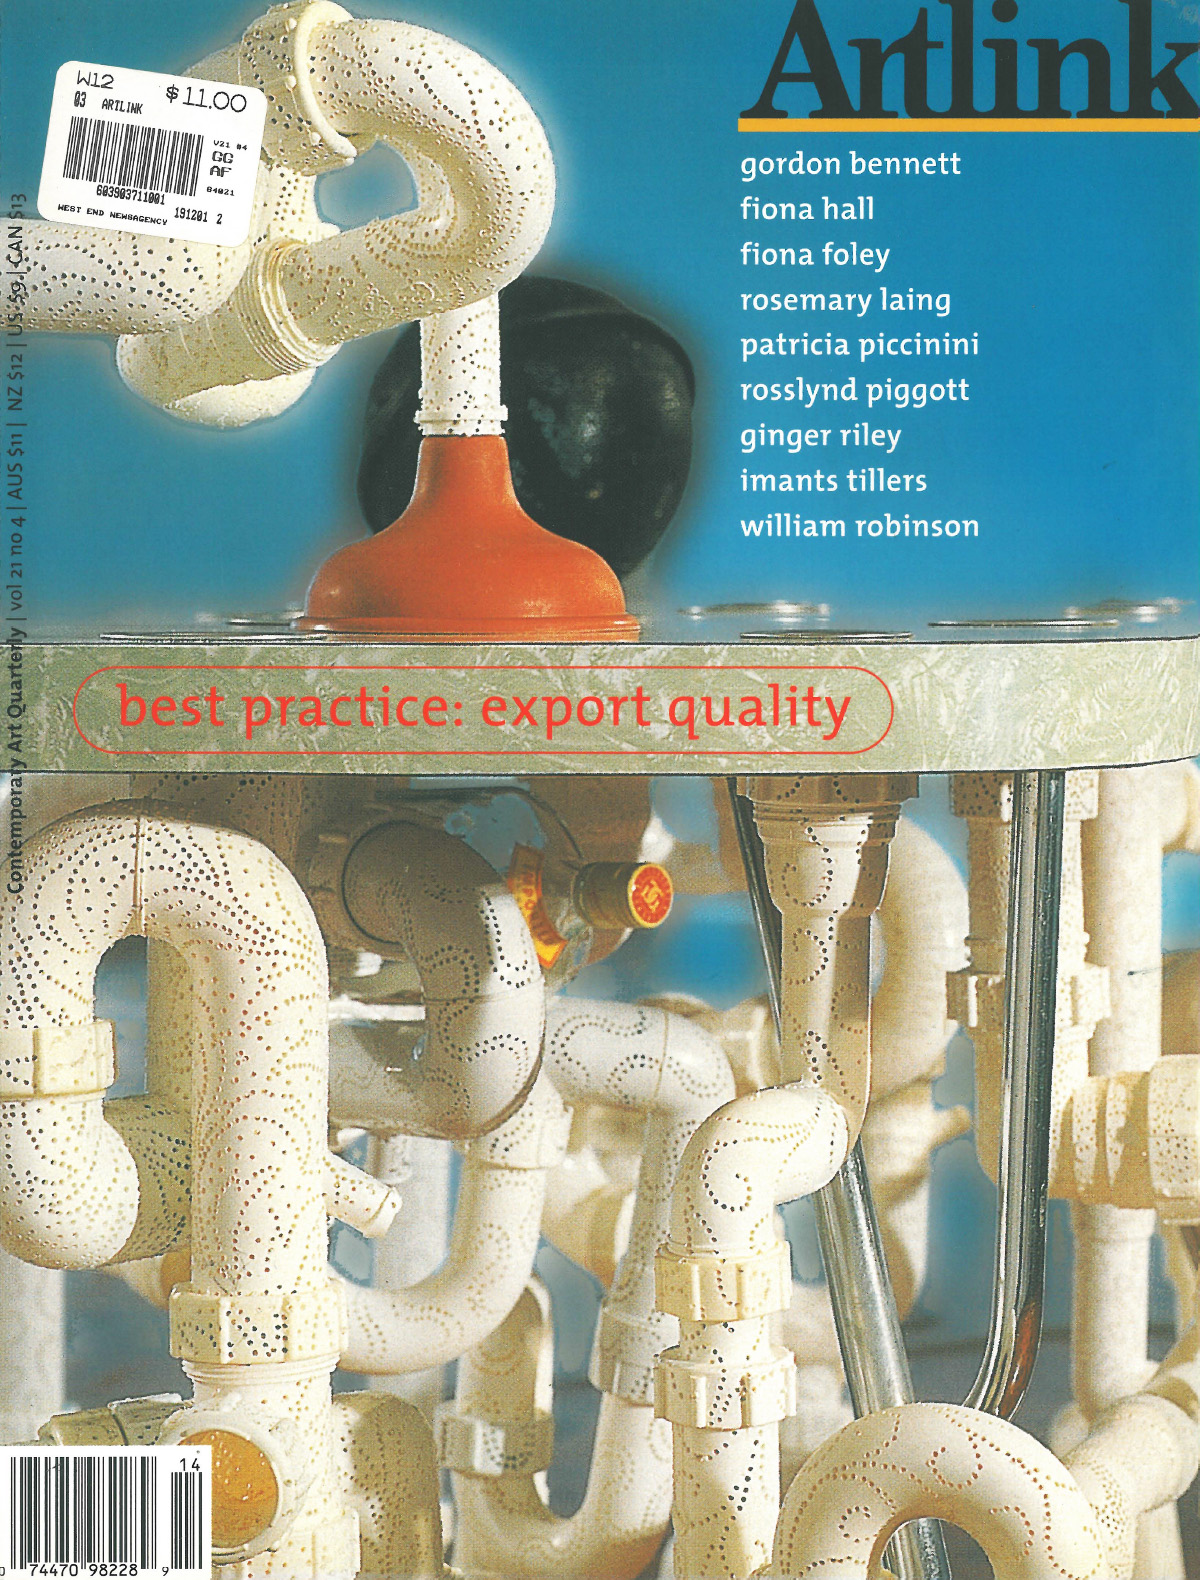 Issue 21:4 | December 2001 | Best Practice: Export Quality